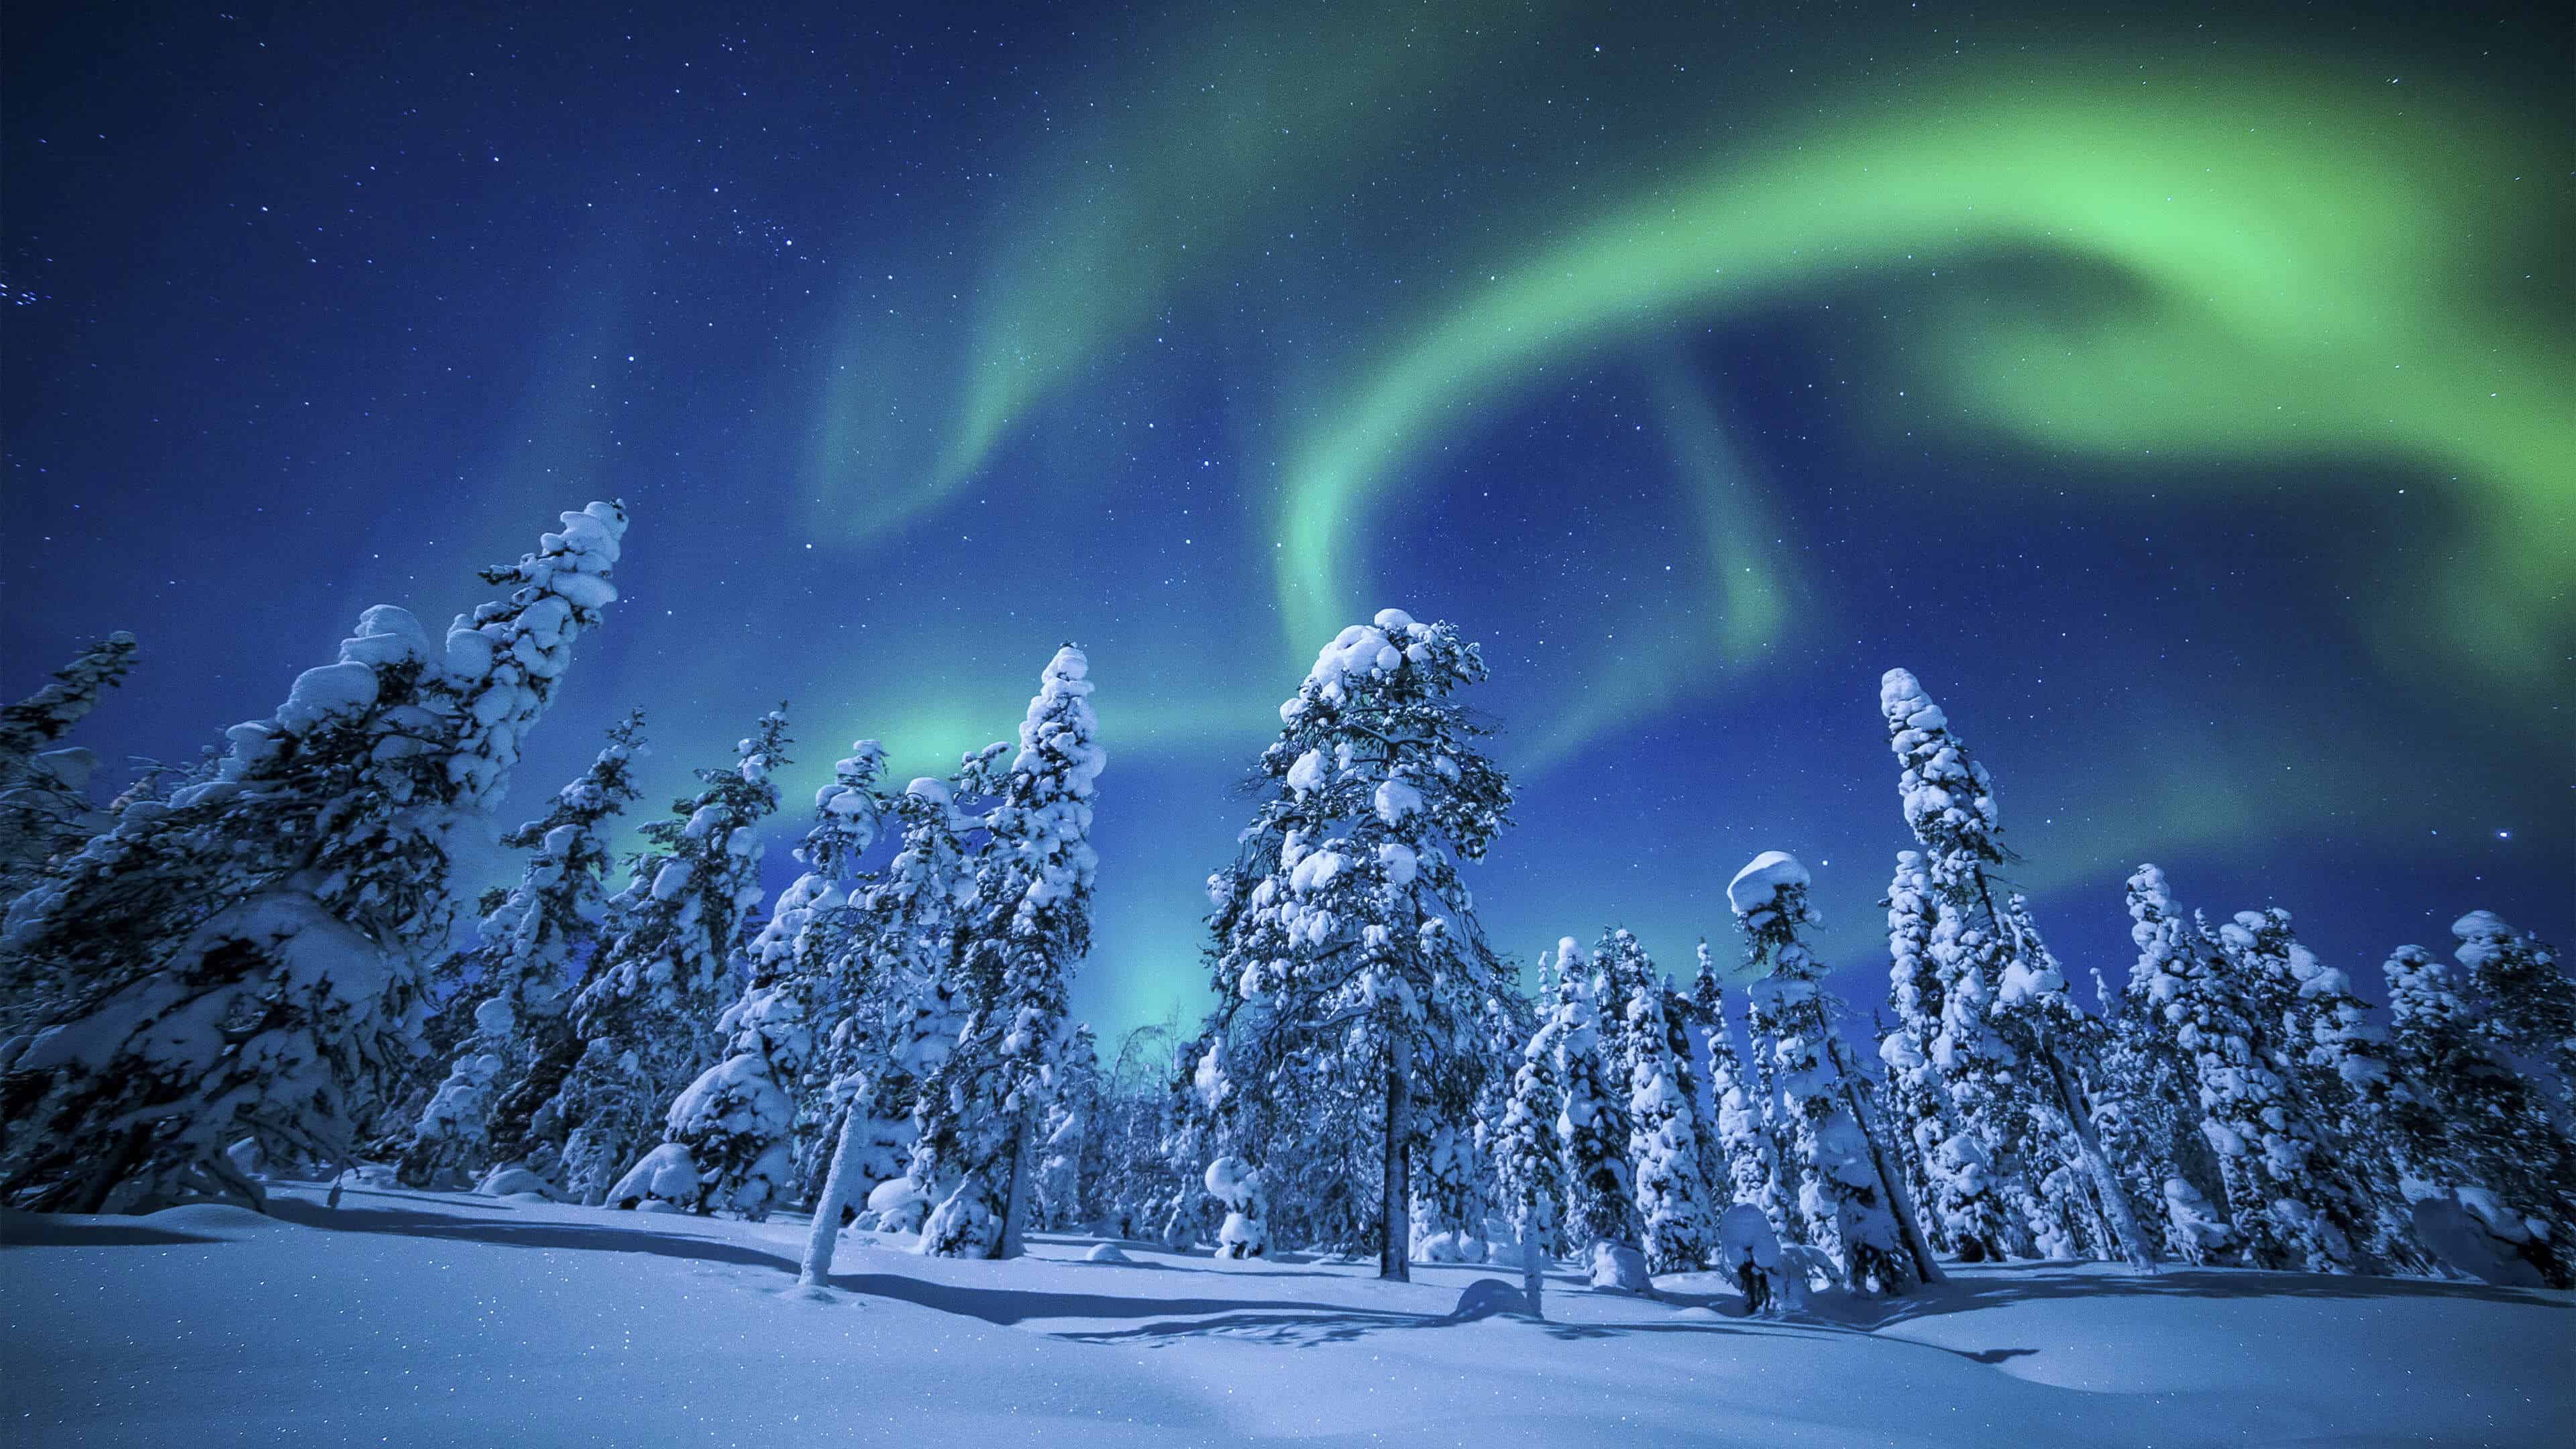 Northern Lights (Aurora Borealis) Over Winter Forest UHD 4K